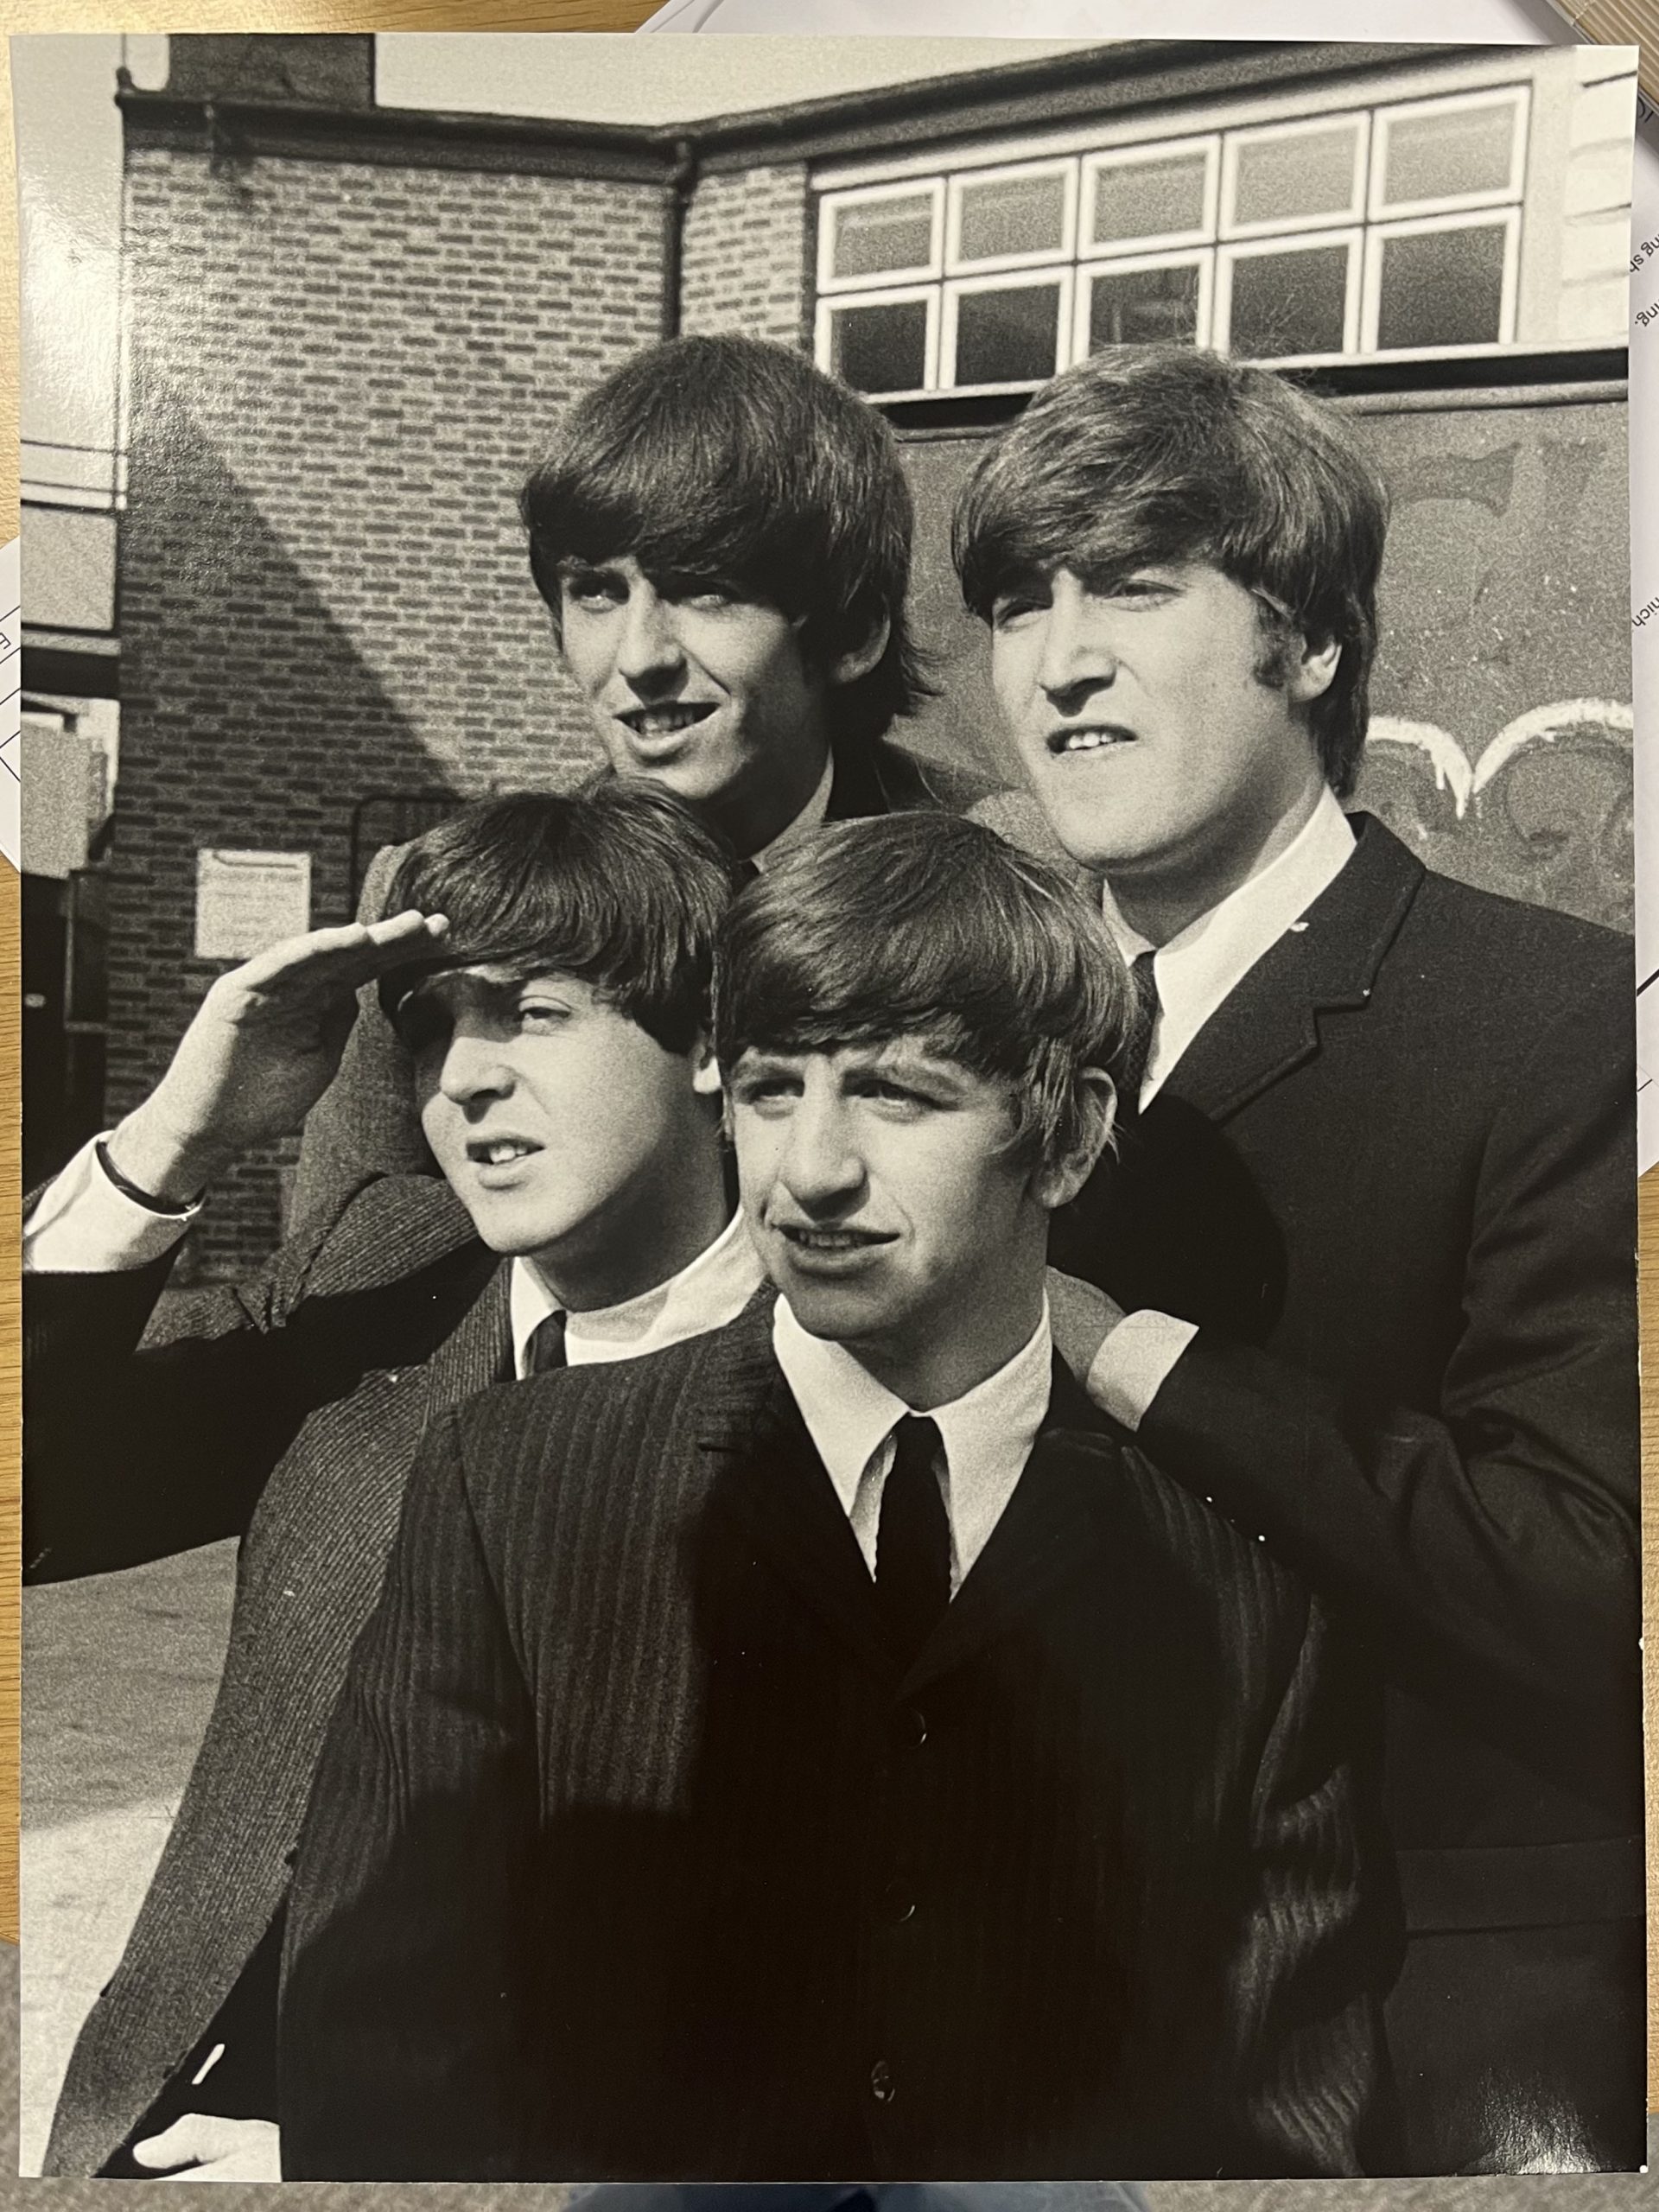 Beatles Photograph by Astrid Kircherr